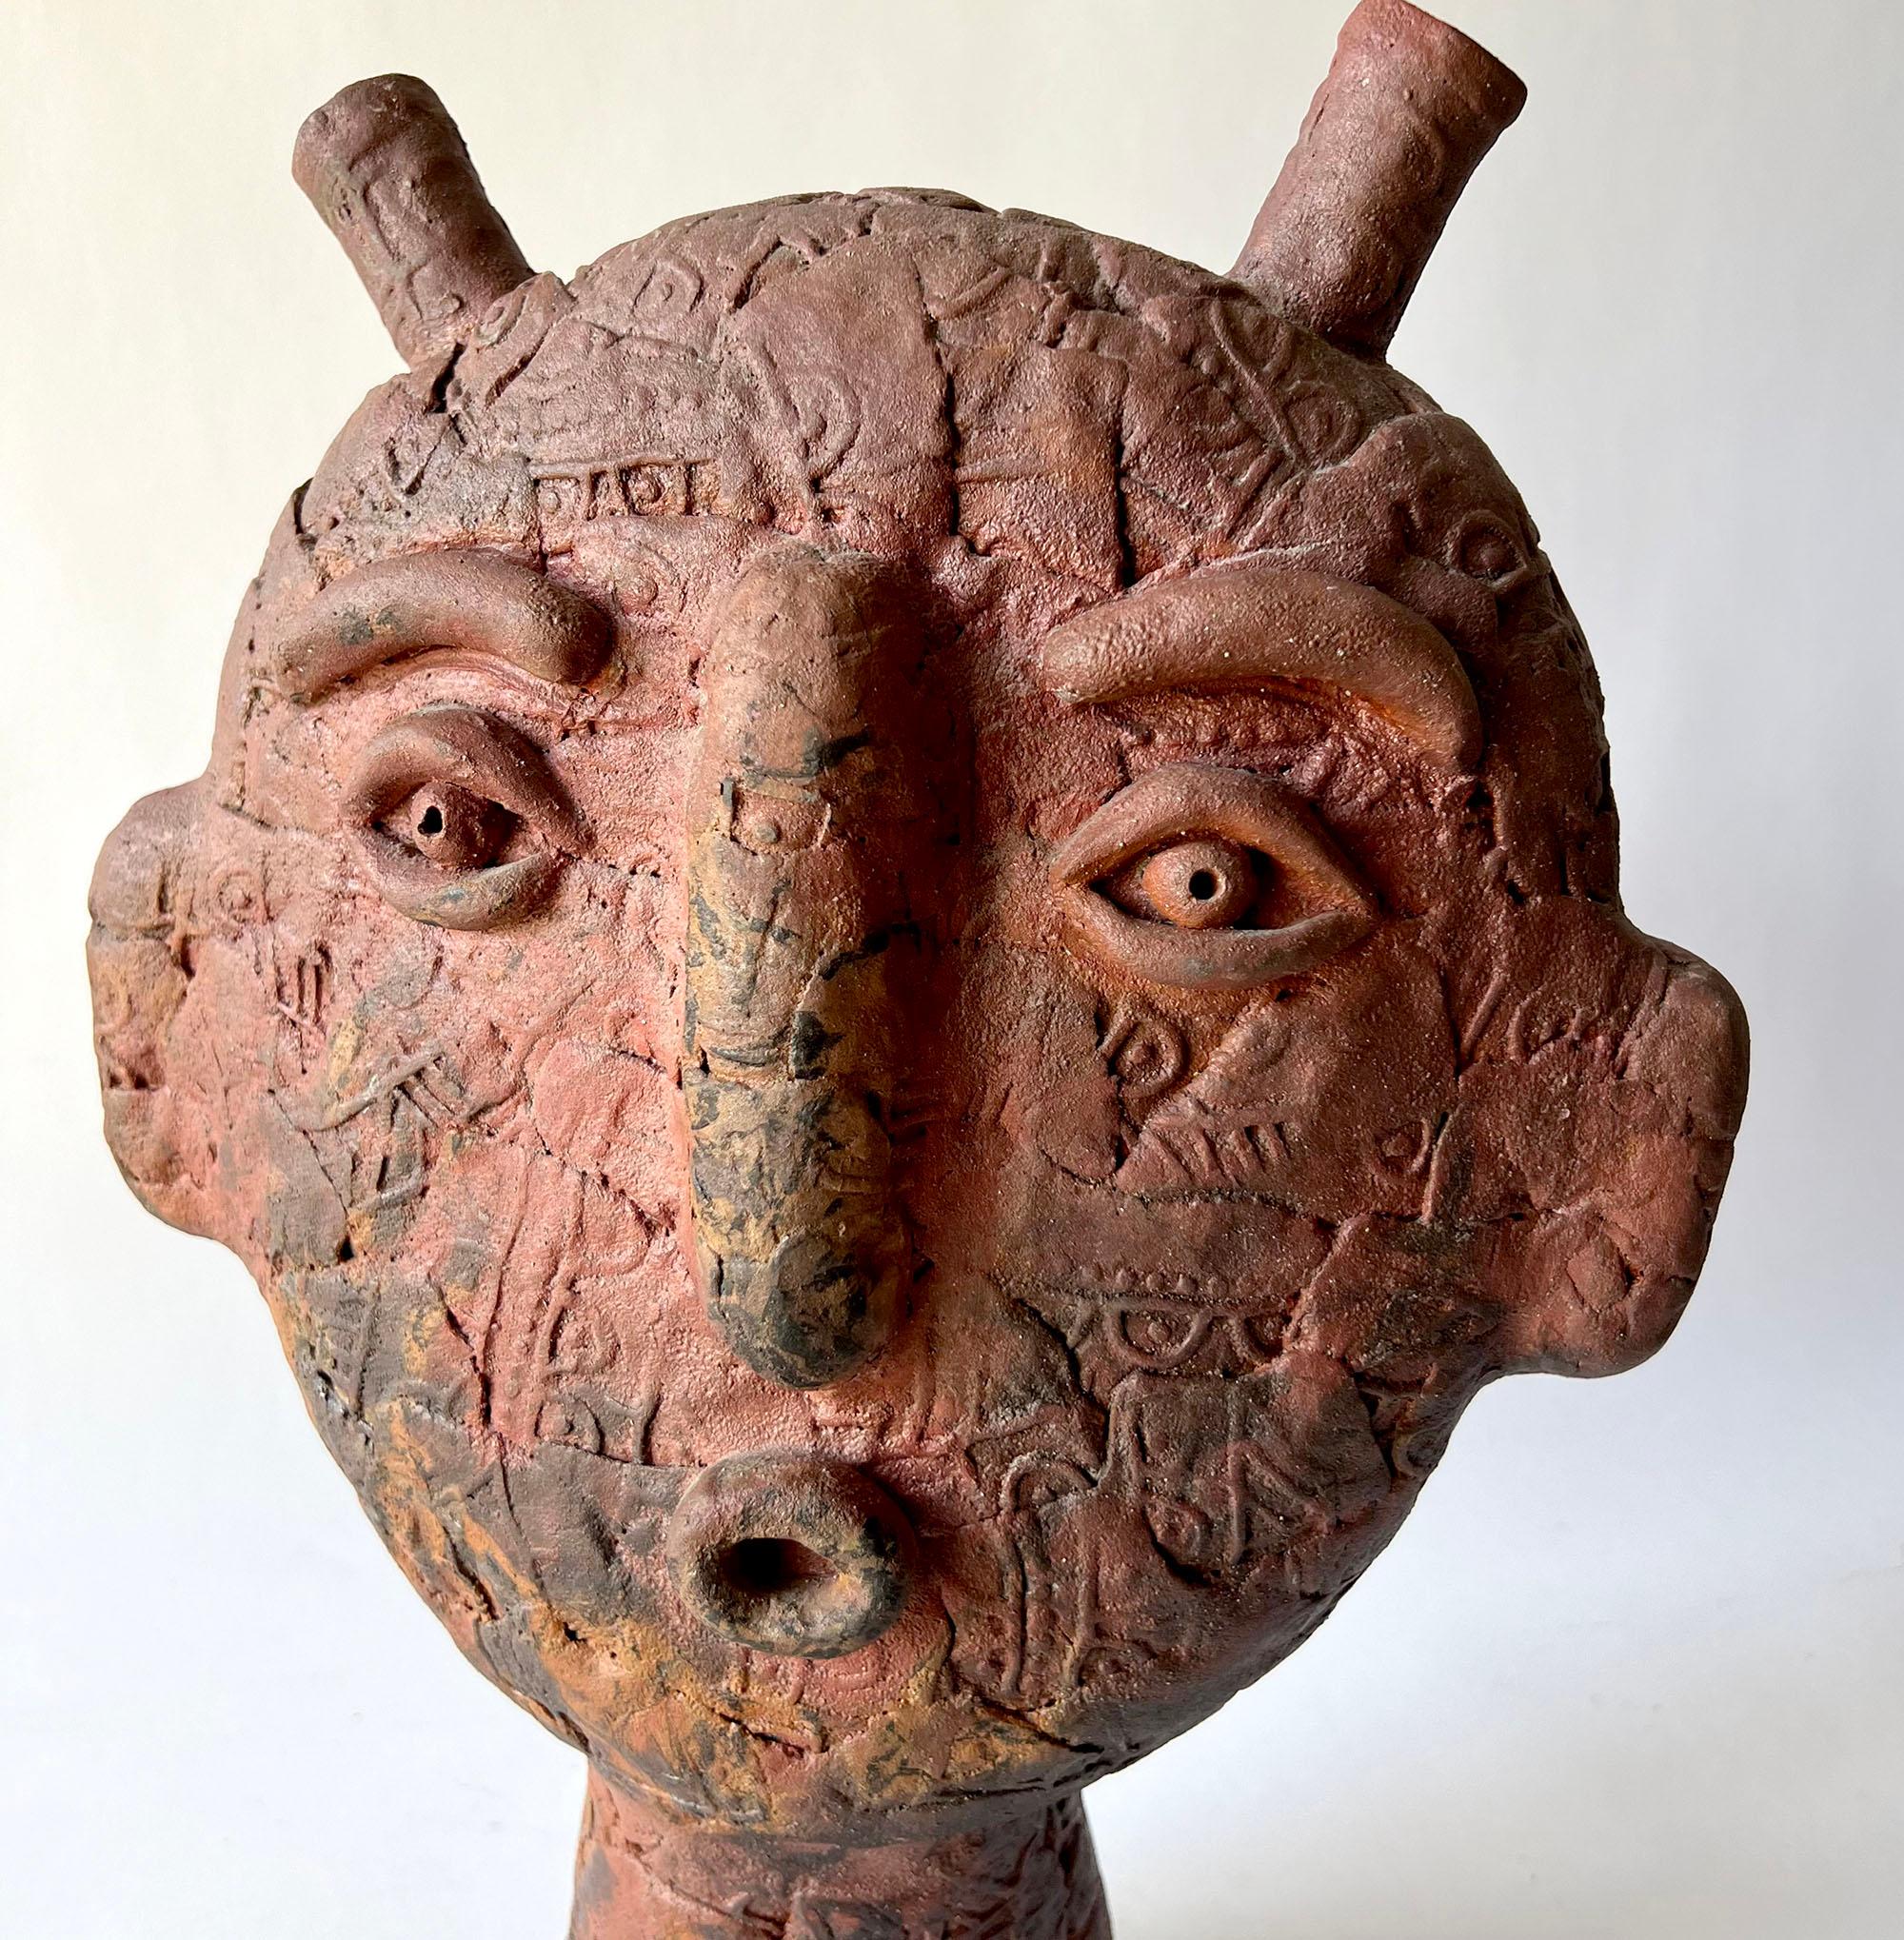 Louis Mendez (American, 1929-2012) handmade ceramic pottery head sculpture with applied symbols. Piece measures 16